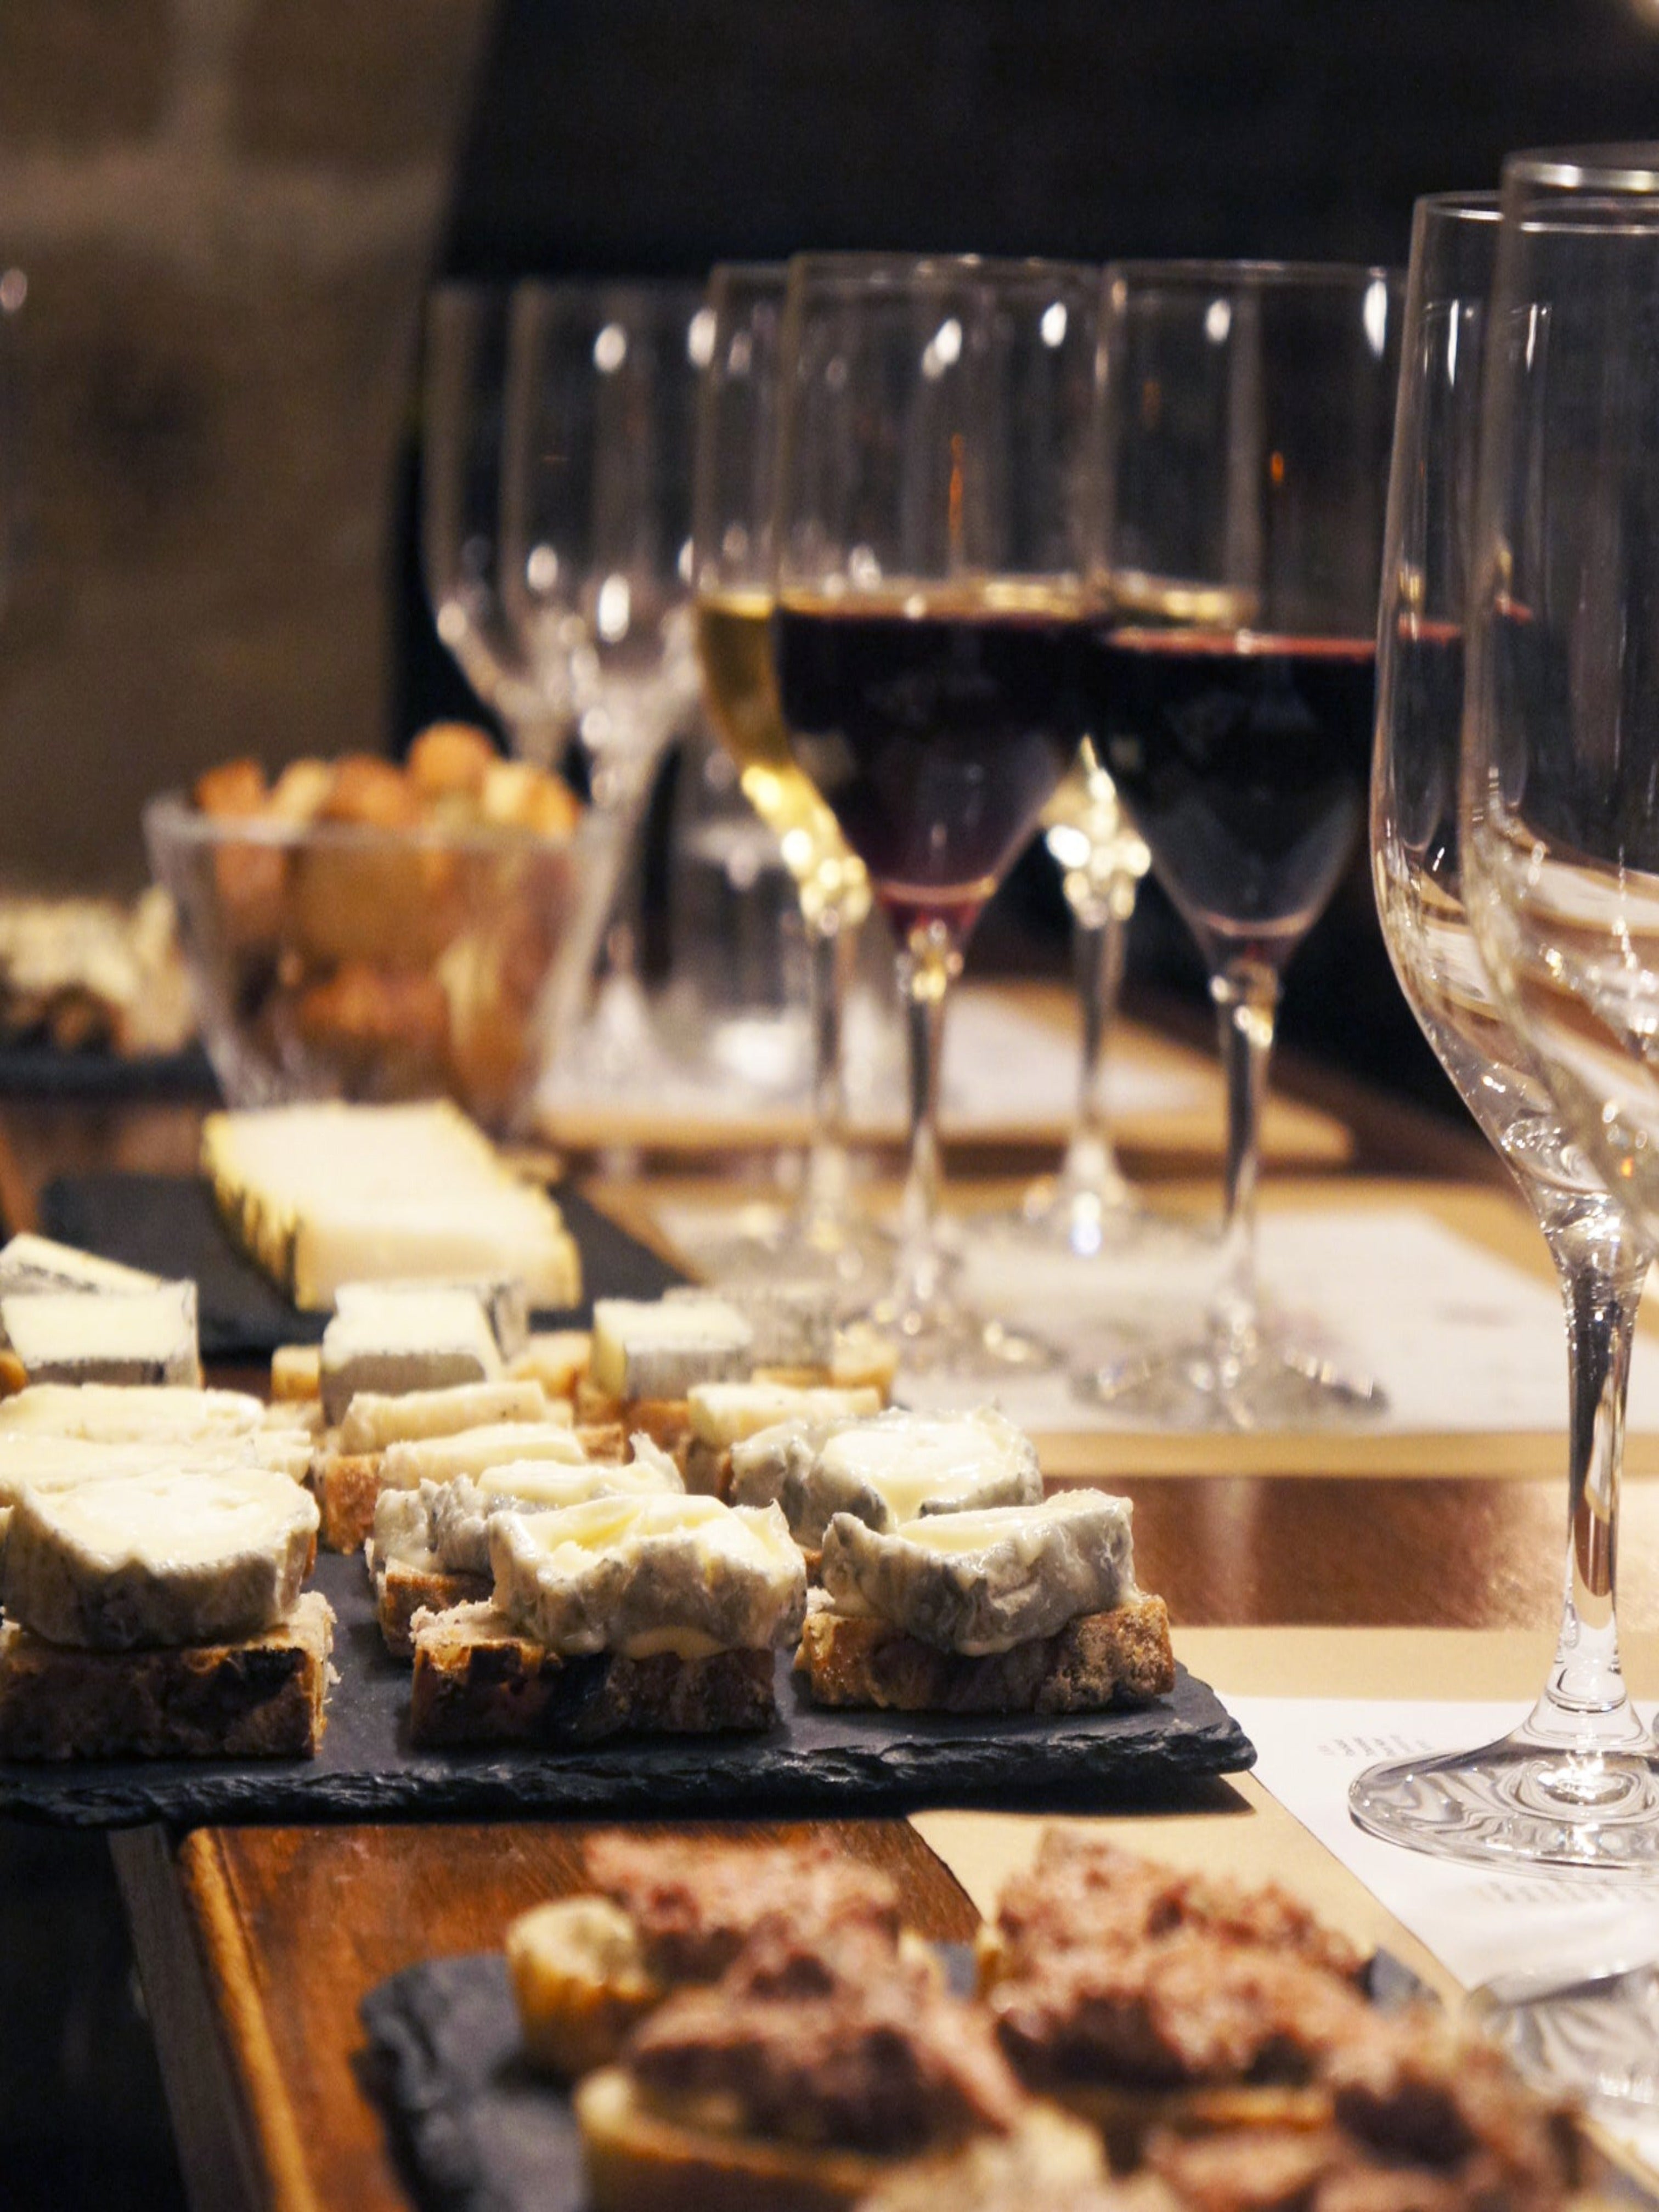 Course: Wines &amp; Cheeses - Terroir (Italian)